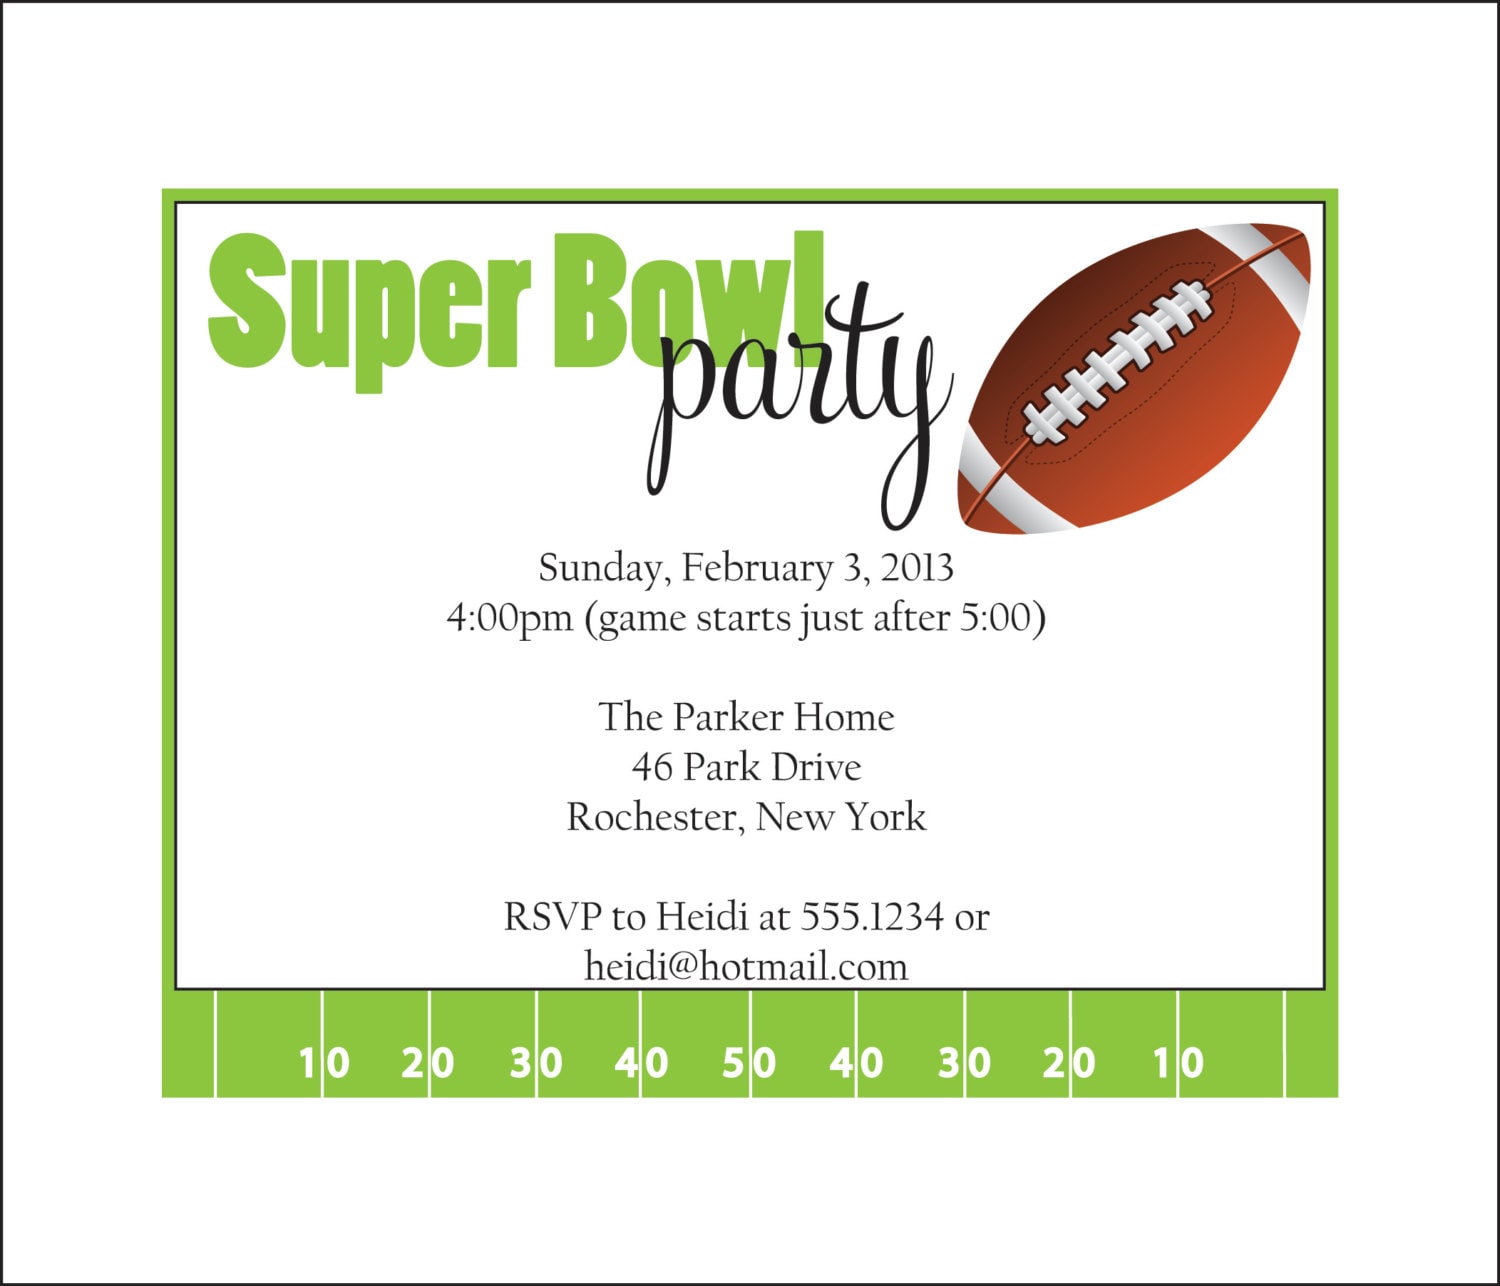 Super Bowl party invitation set of 10 by SimplyStampedInvites